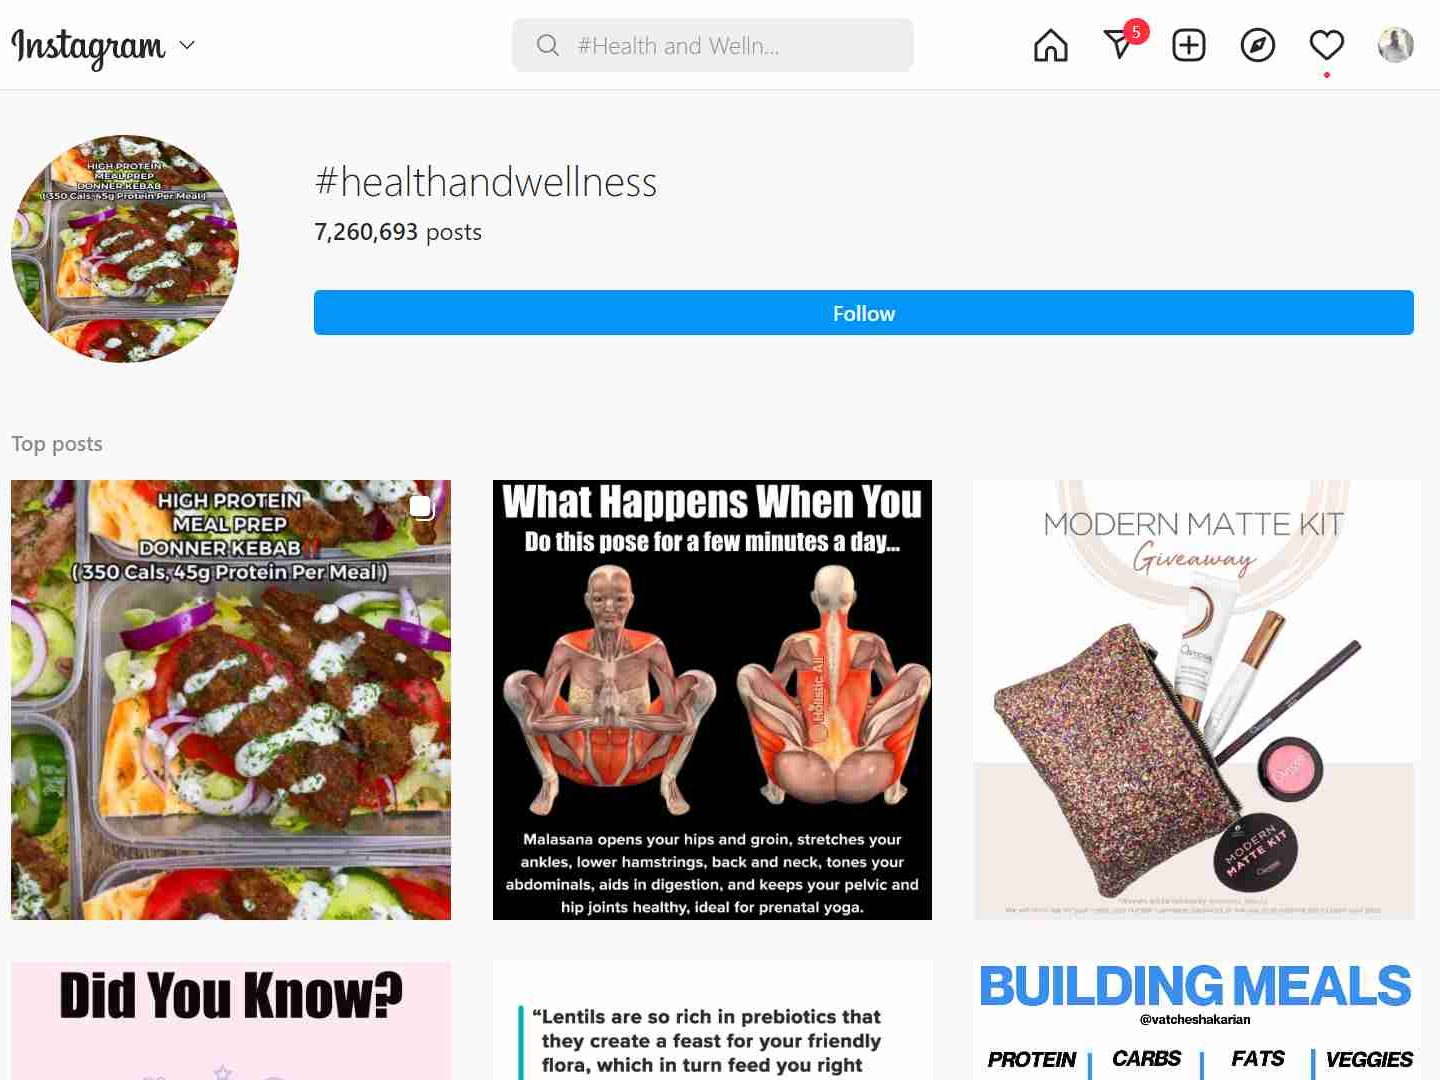 Health and wellness hashtags